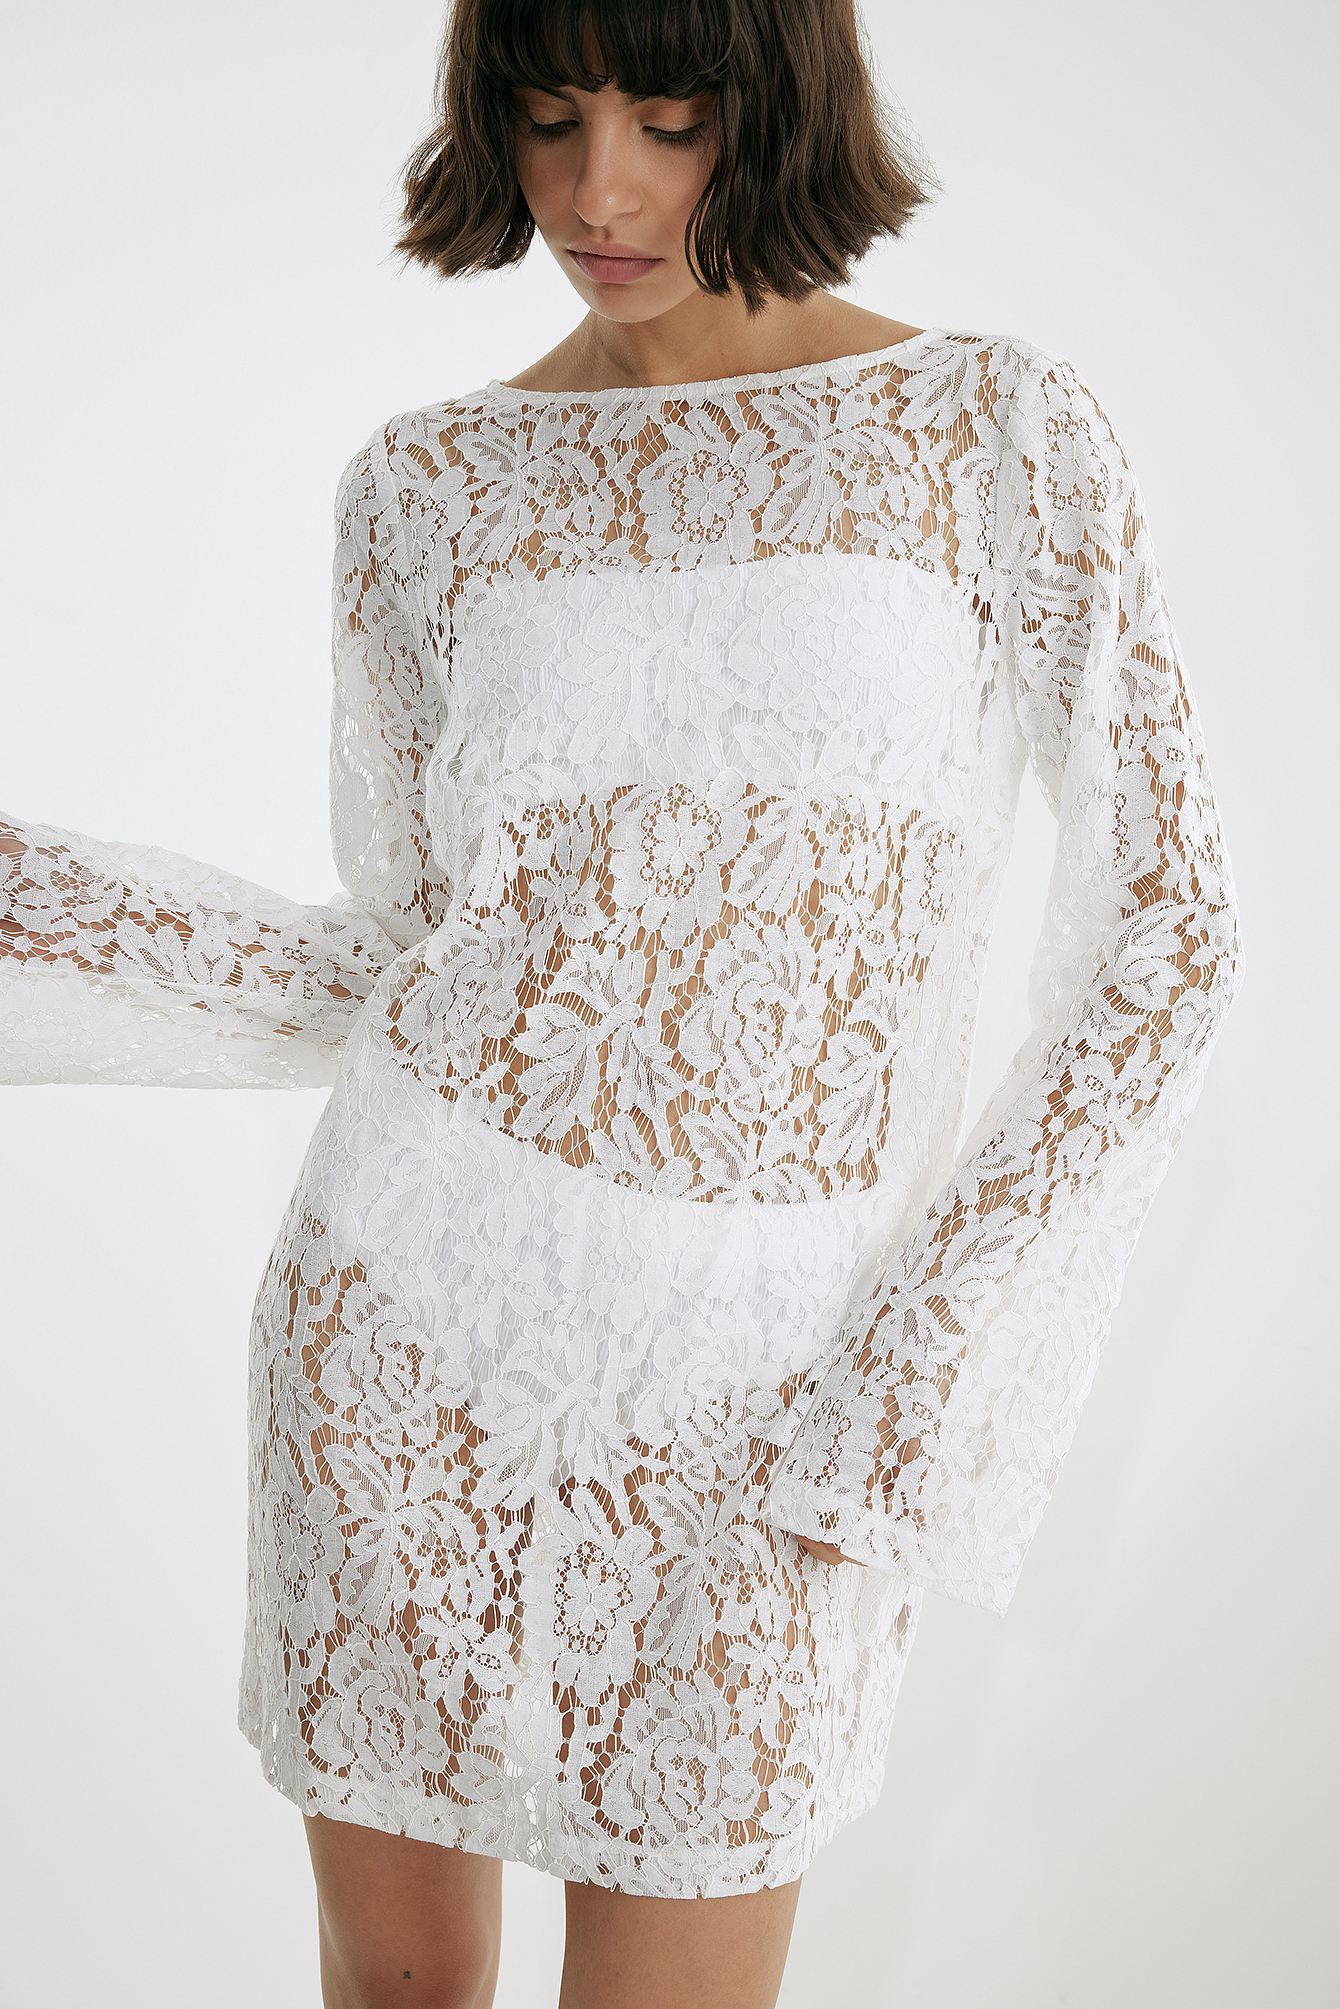 Josefine HJ x NA-KD Lace Mini Dress - White